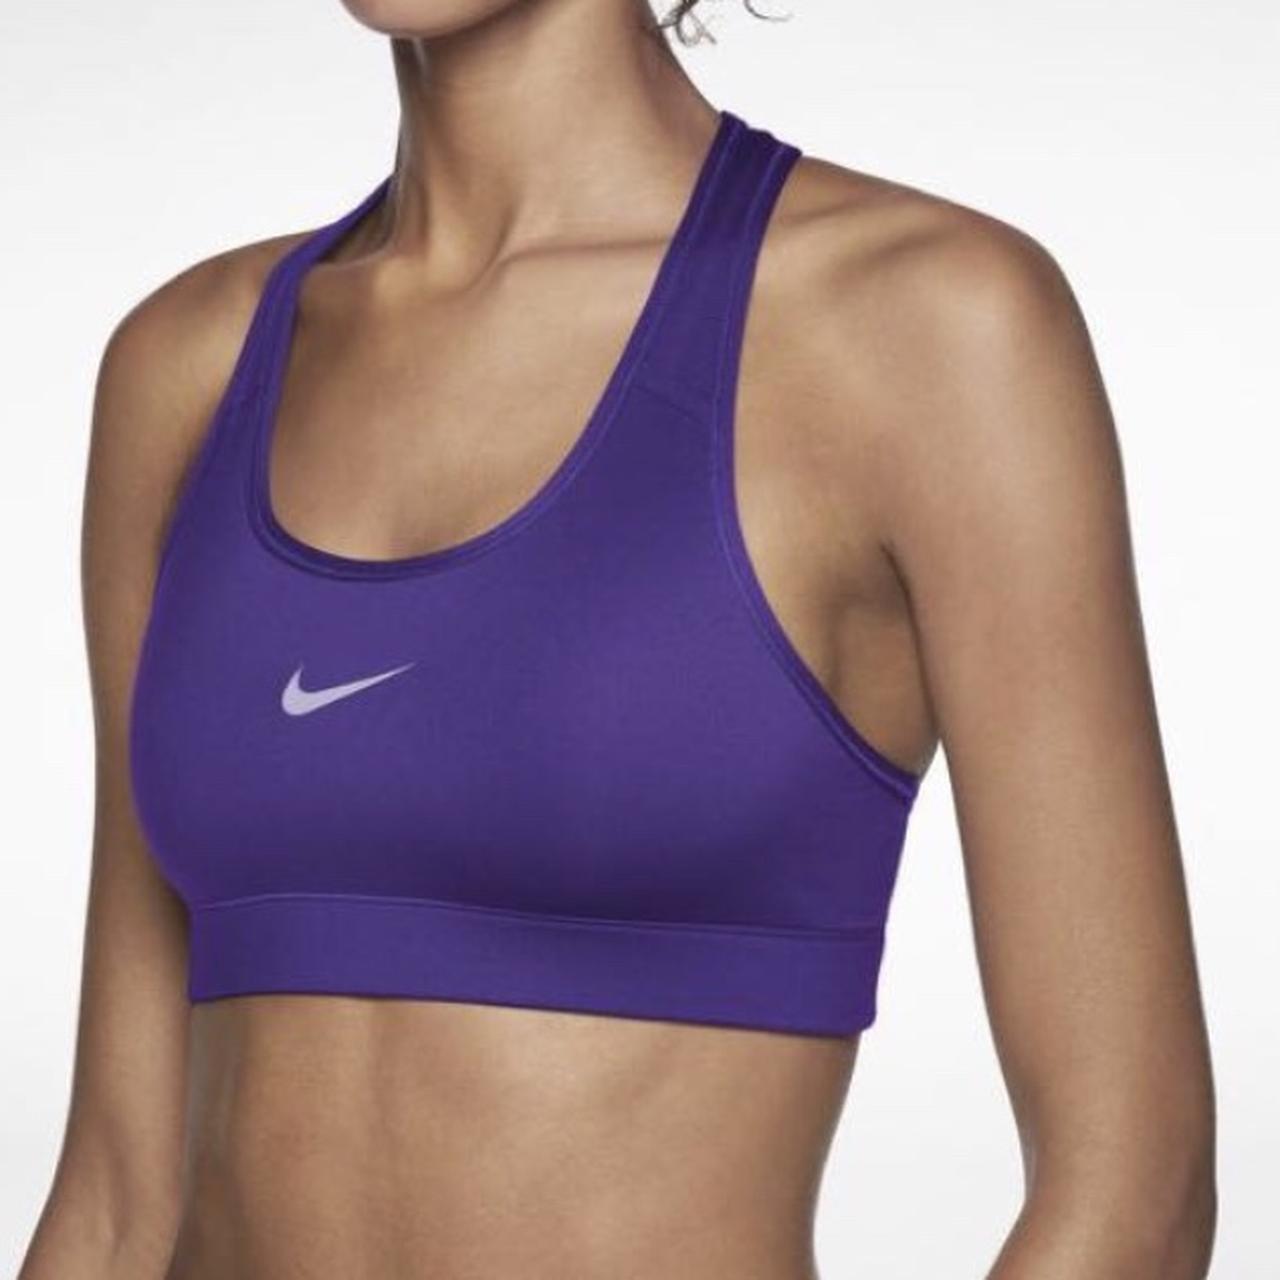 Nike Pro purple sports bra XS. Used but in good